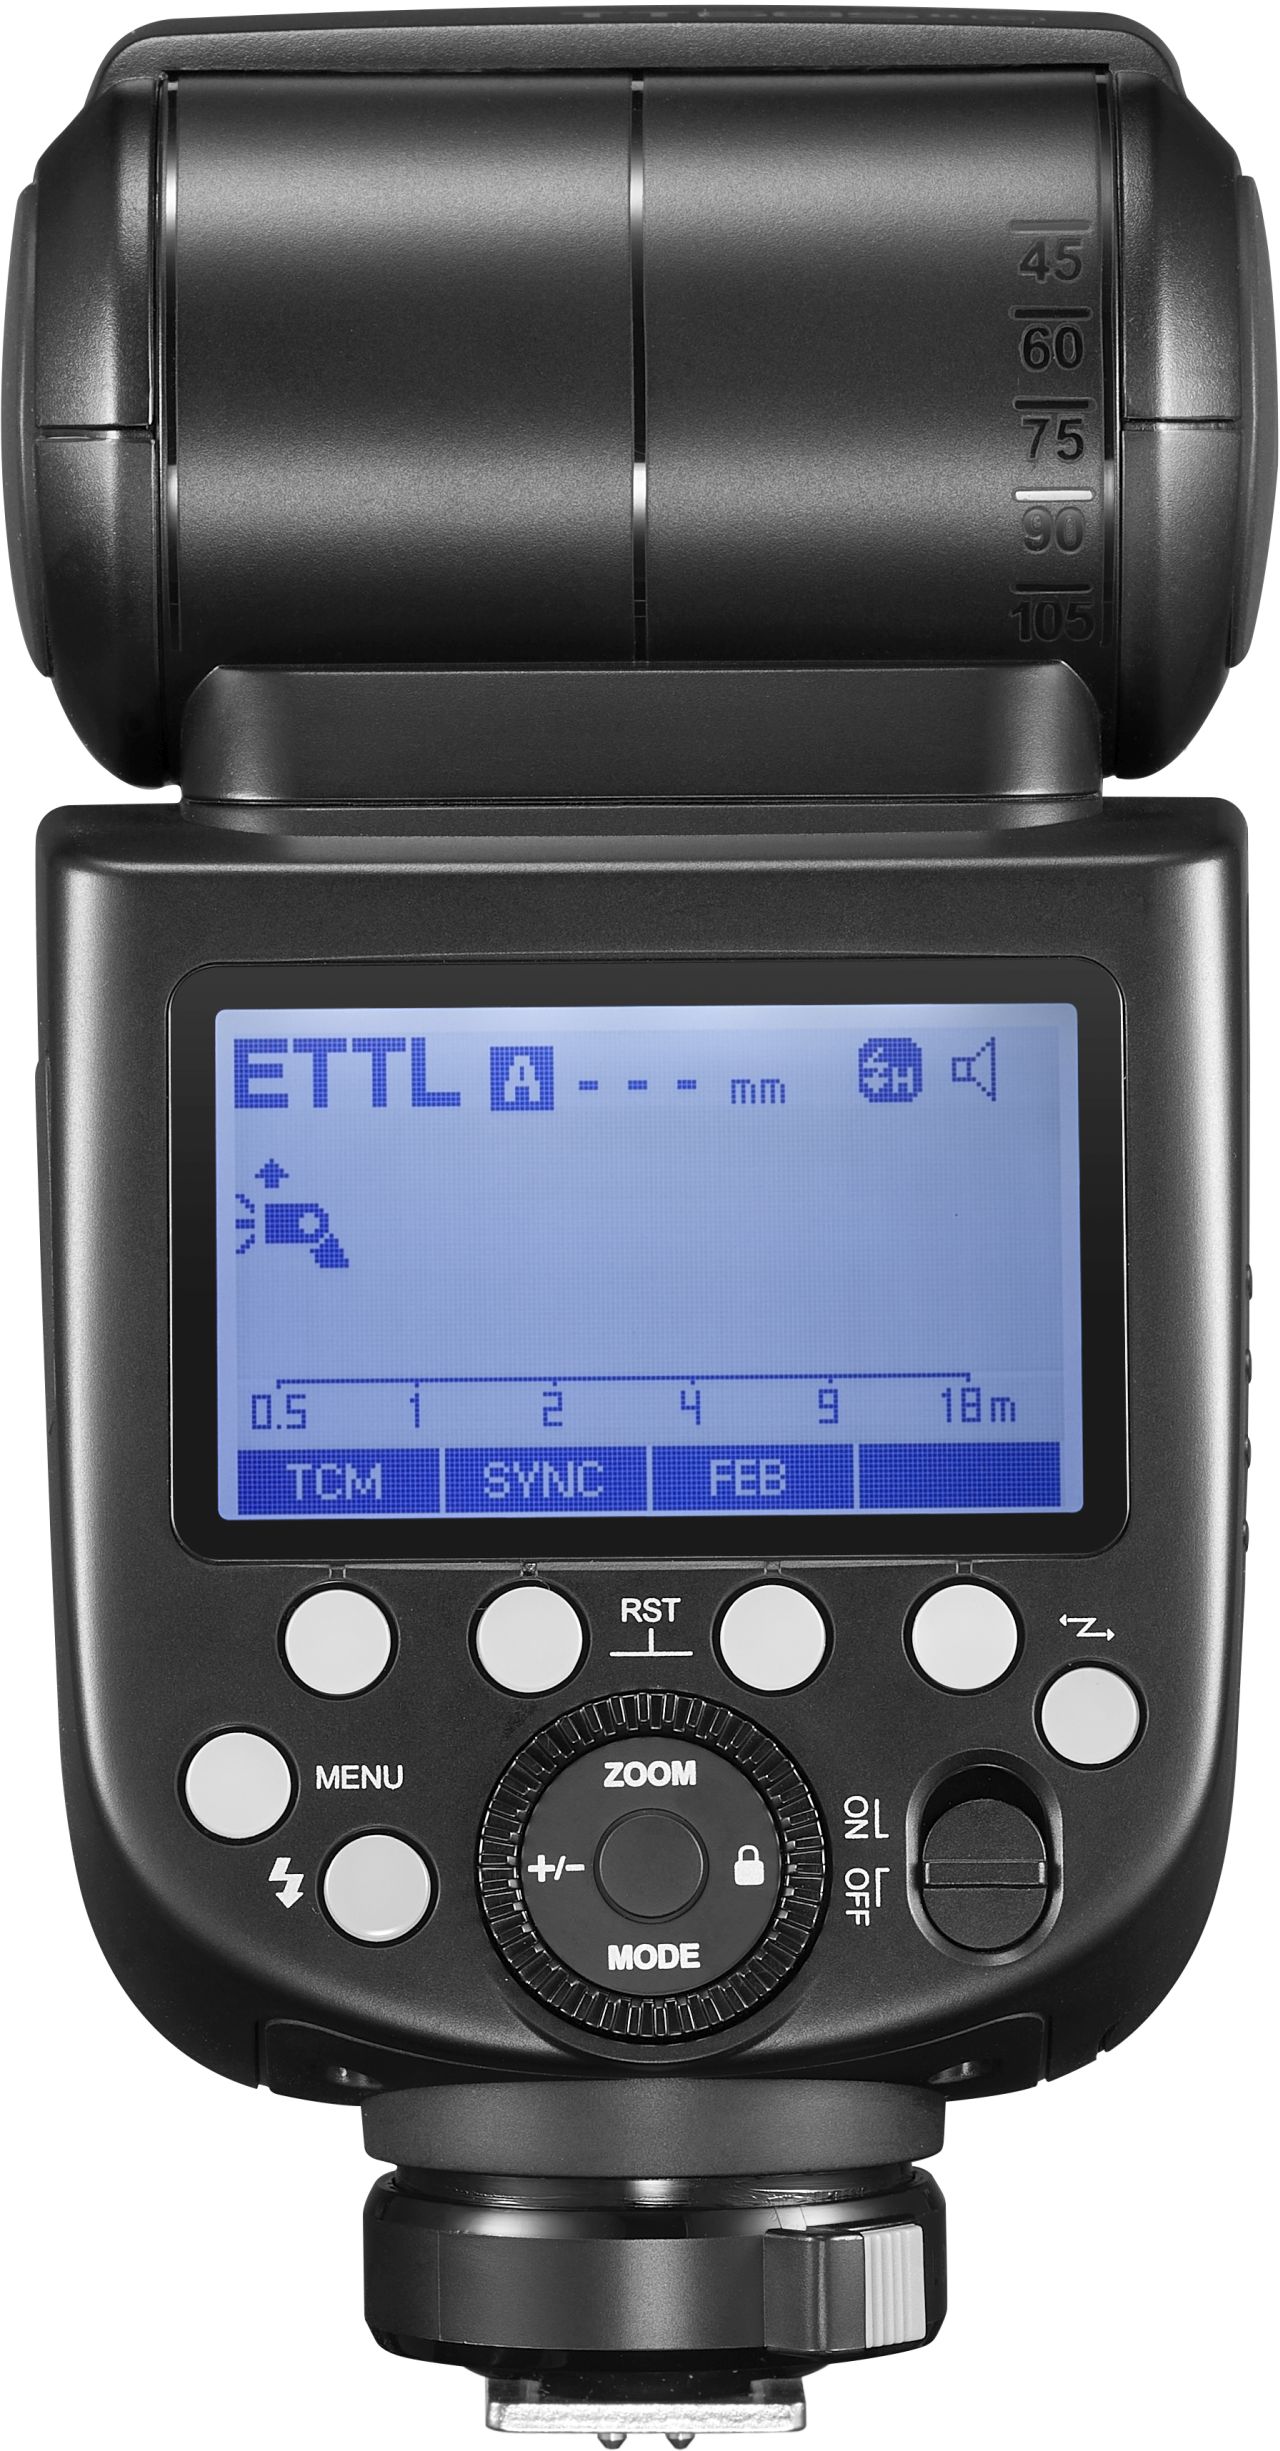 Godox TT685 II S - flash unit for Sony - Foto Erhardt